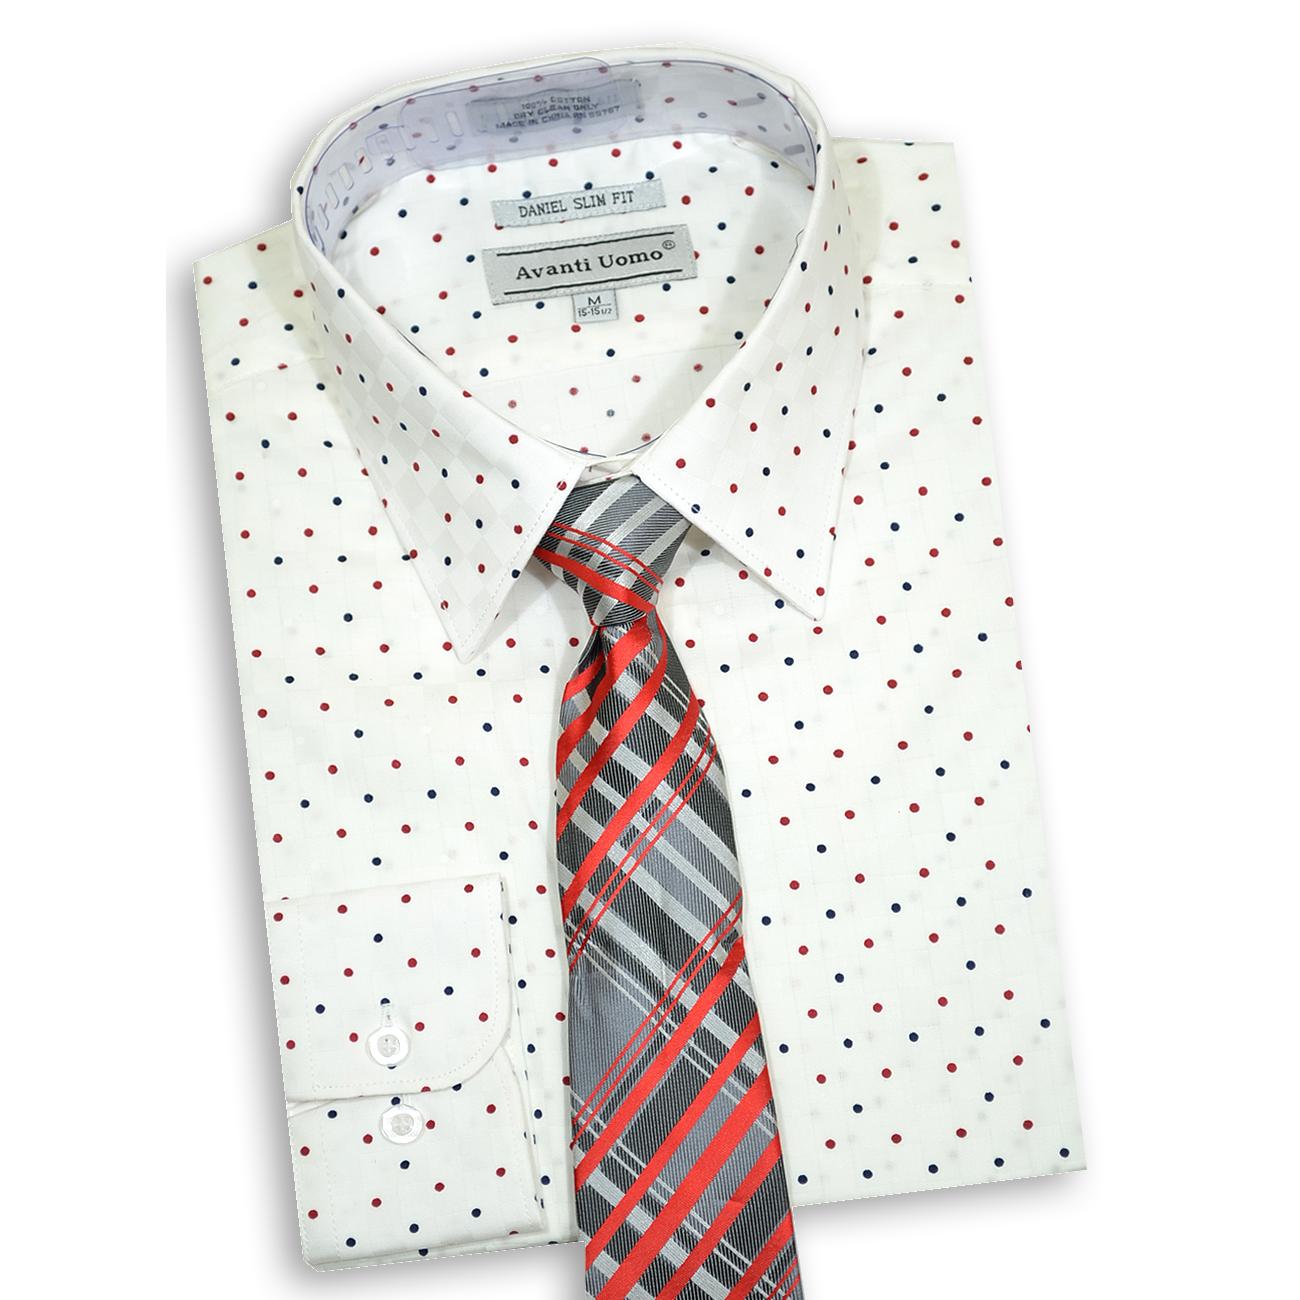 Sweeten Polished Decompose Avanti Uomo White / Burgundy / Black Polka Dot Design Cotton Slim Fit Shirt  / Tie Set DNS10 Avanti Polka Dot Slim Shirt/Tie Set | Upscale Menswear [] -  $79.80 :: Upscale Menswear - UpscaleMenswear.com